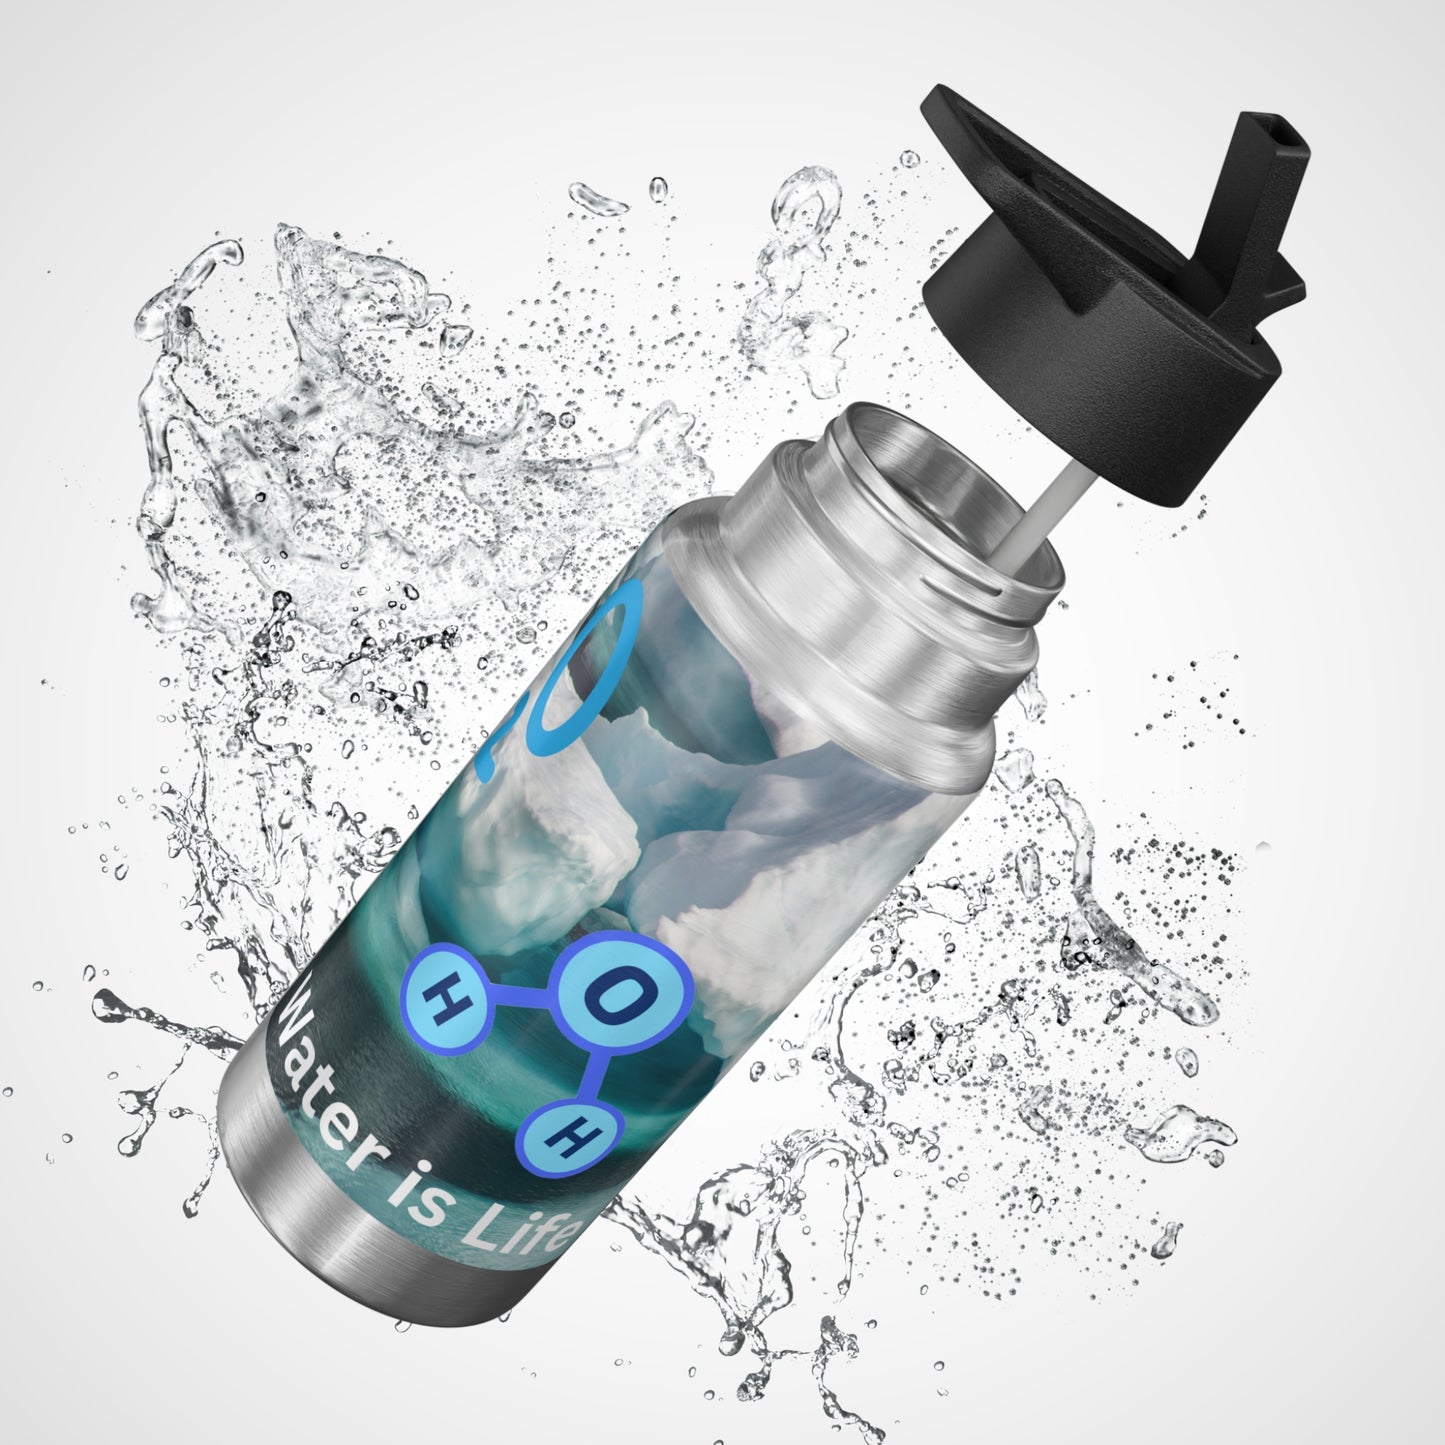 Water Bottle or Favourite Beverage, H2O Antarctica 32oz